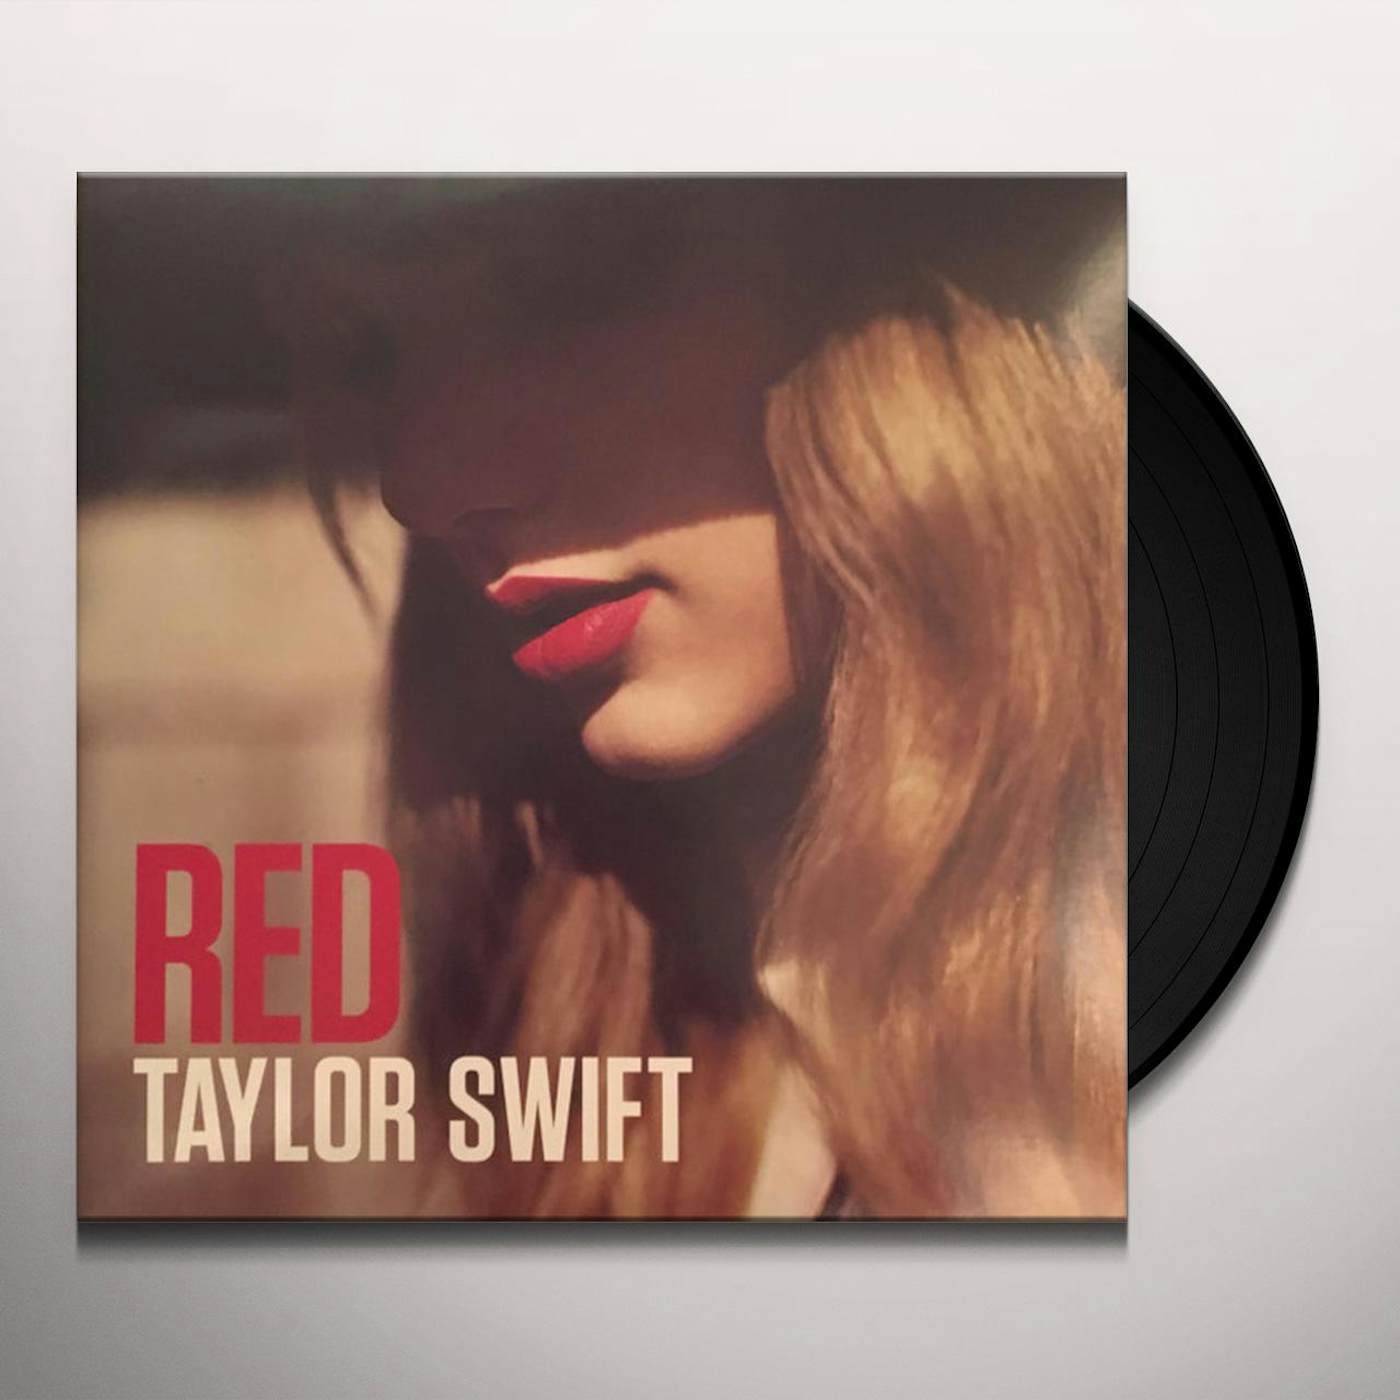 Taylor Swift - Lover (Vinyl Double LP)